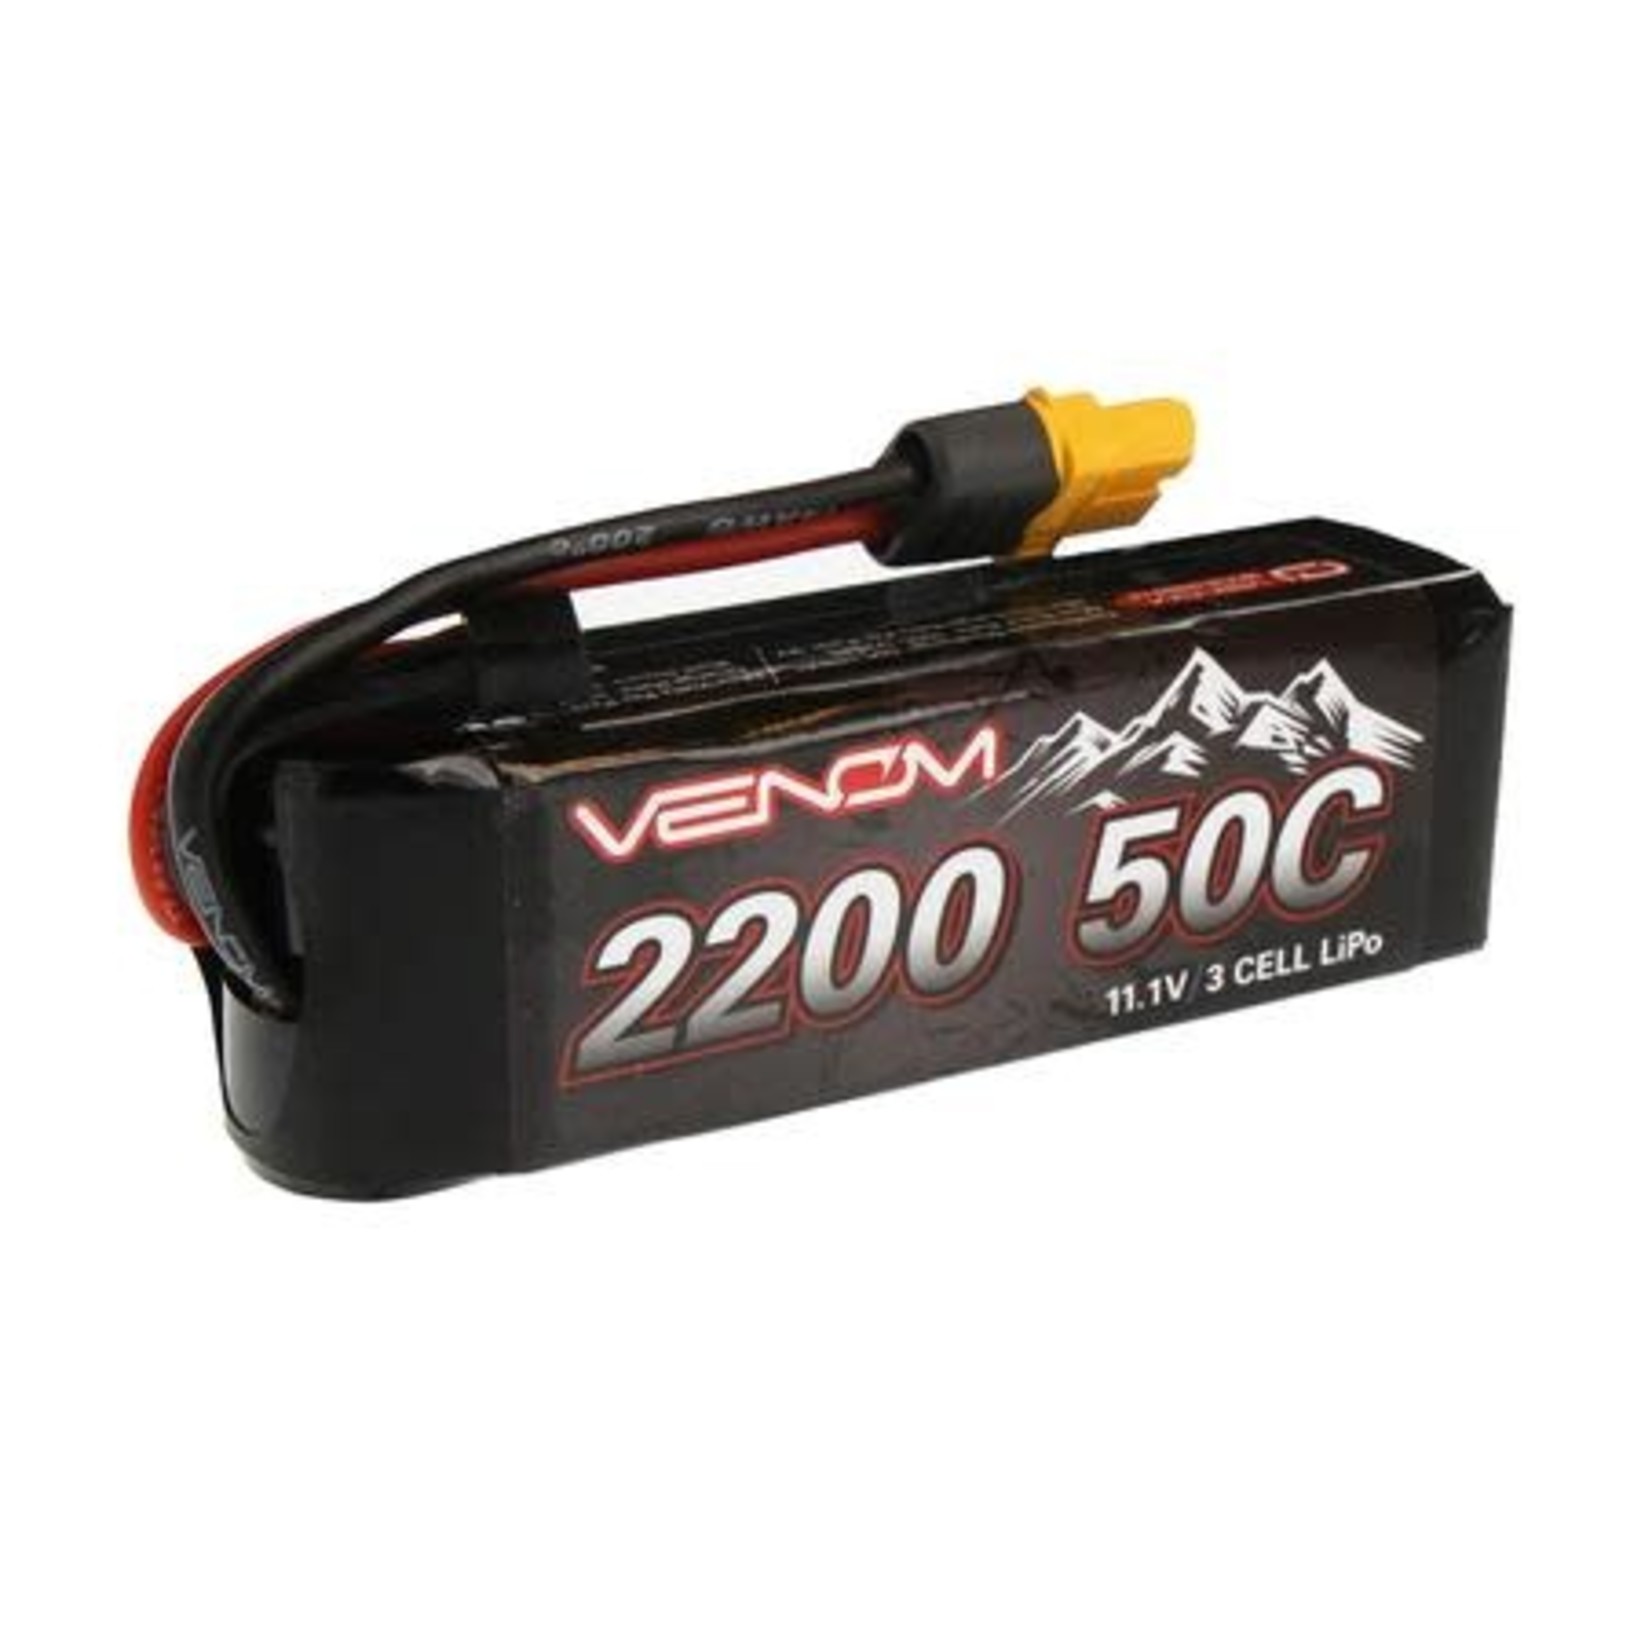 Venom Power Venom Racing - RC Rock Crawler 50C 3S 2200mAh 11.1V LiPo Battery with Universal 2.0 Plugs #15190